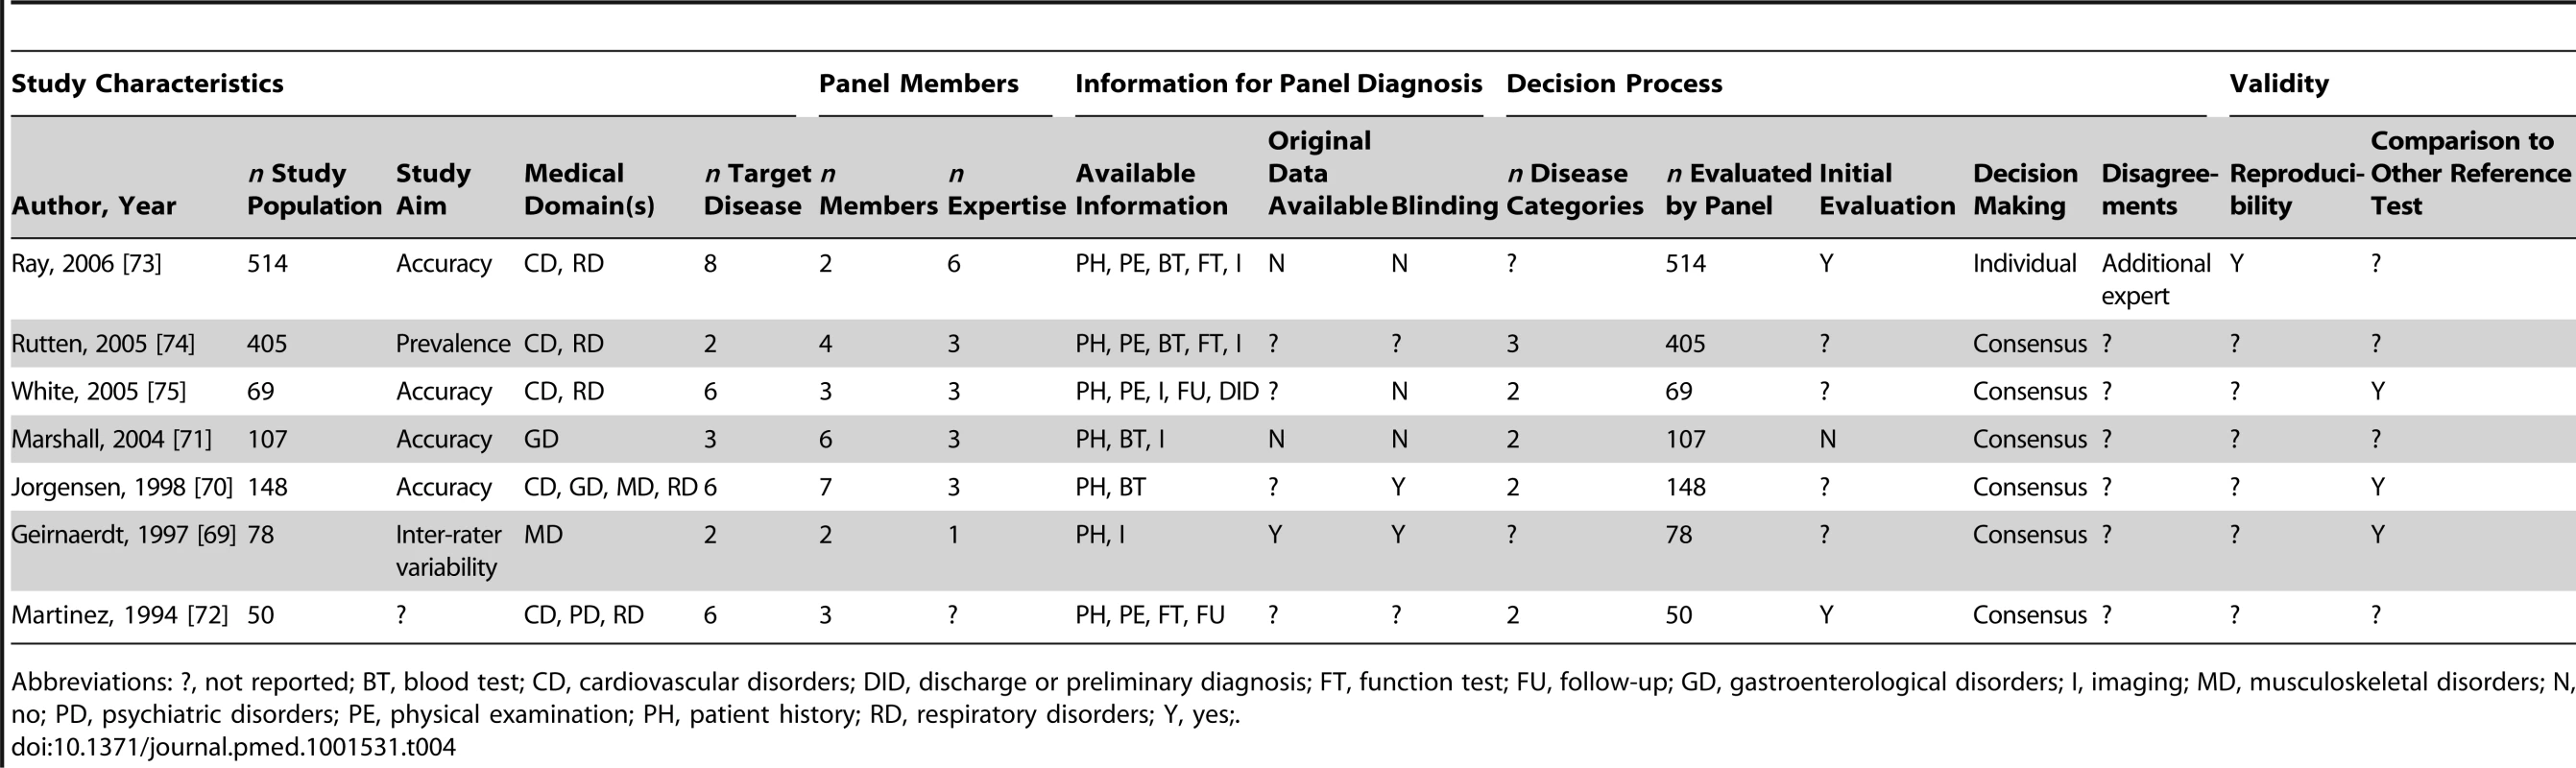 Study characteristics of articles assessing multiple diseases, <i>n</i> = 7.